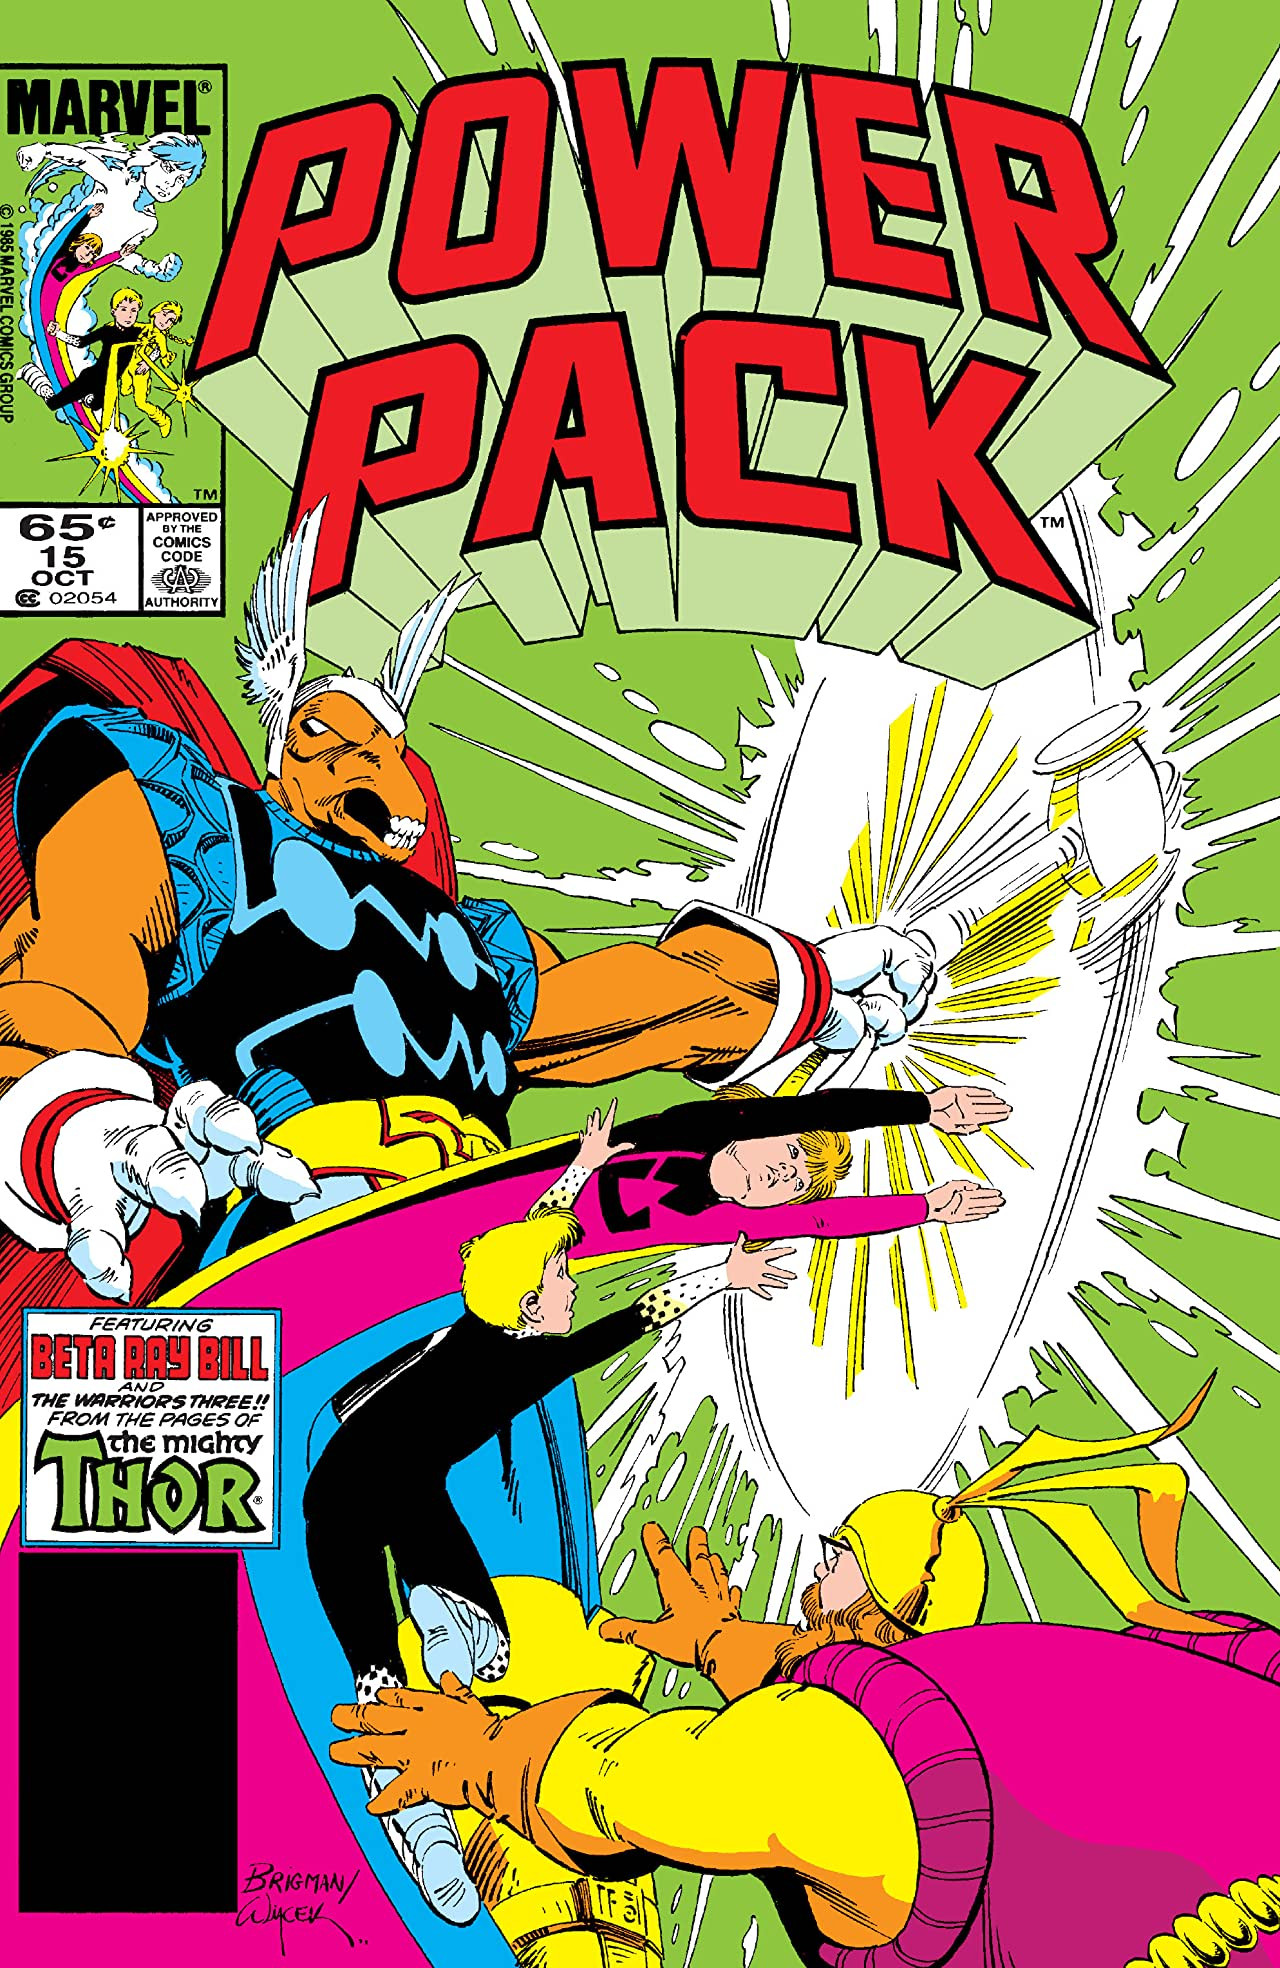 POWER PACK returns in new one-shot by Louise Simonson, June